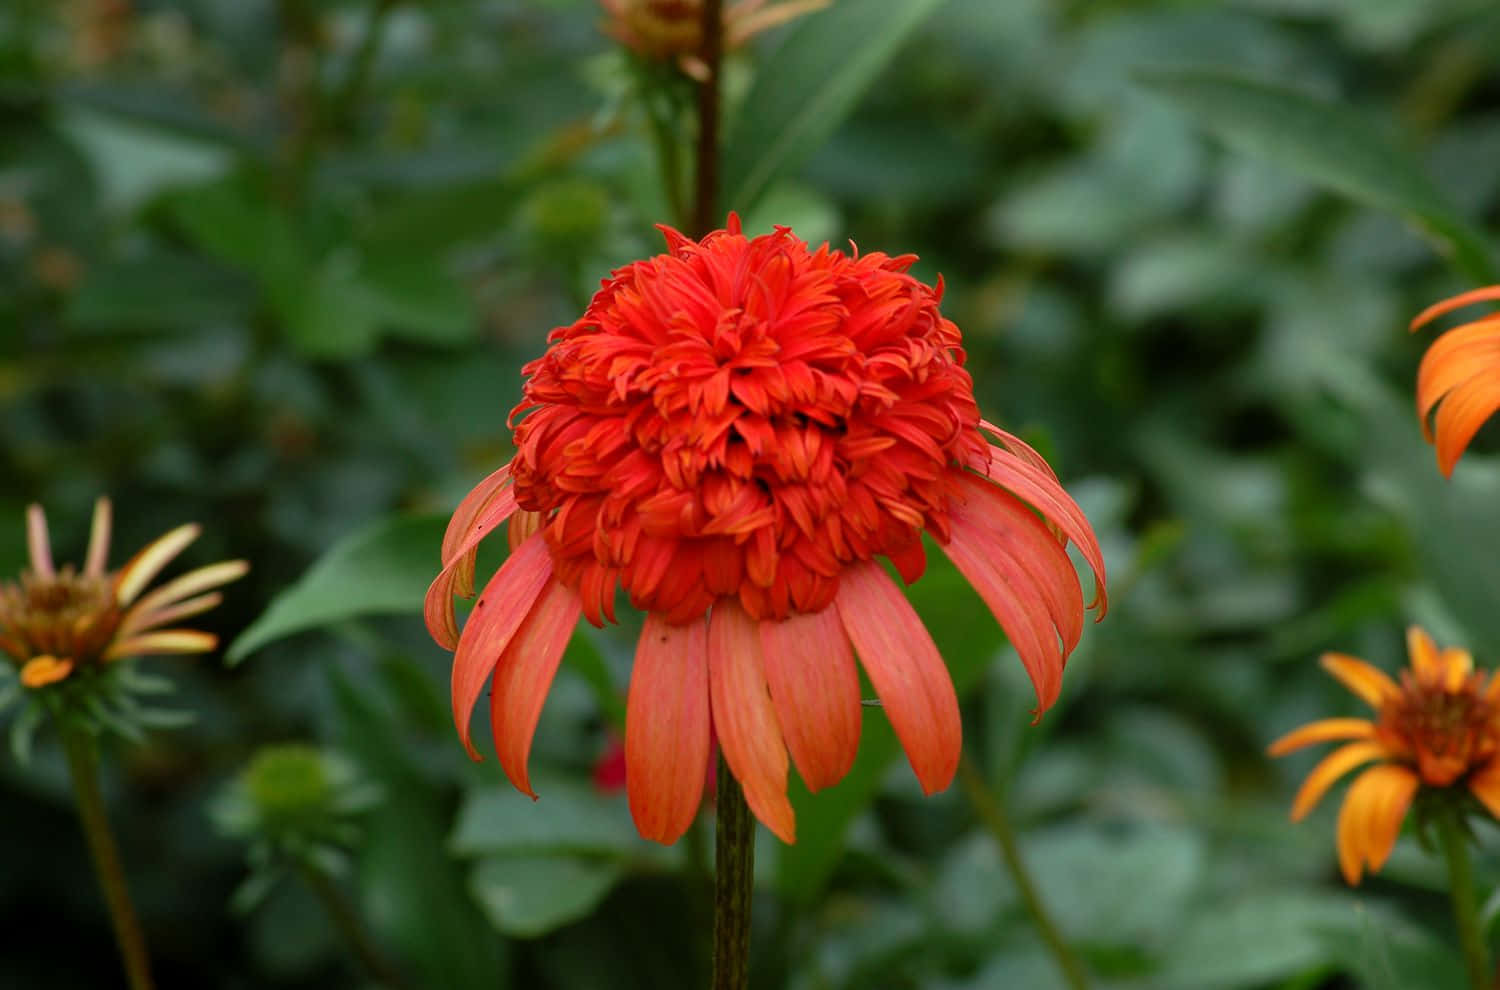 A Flower With Orange Petals